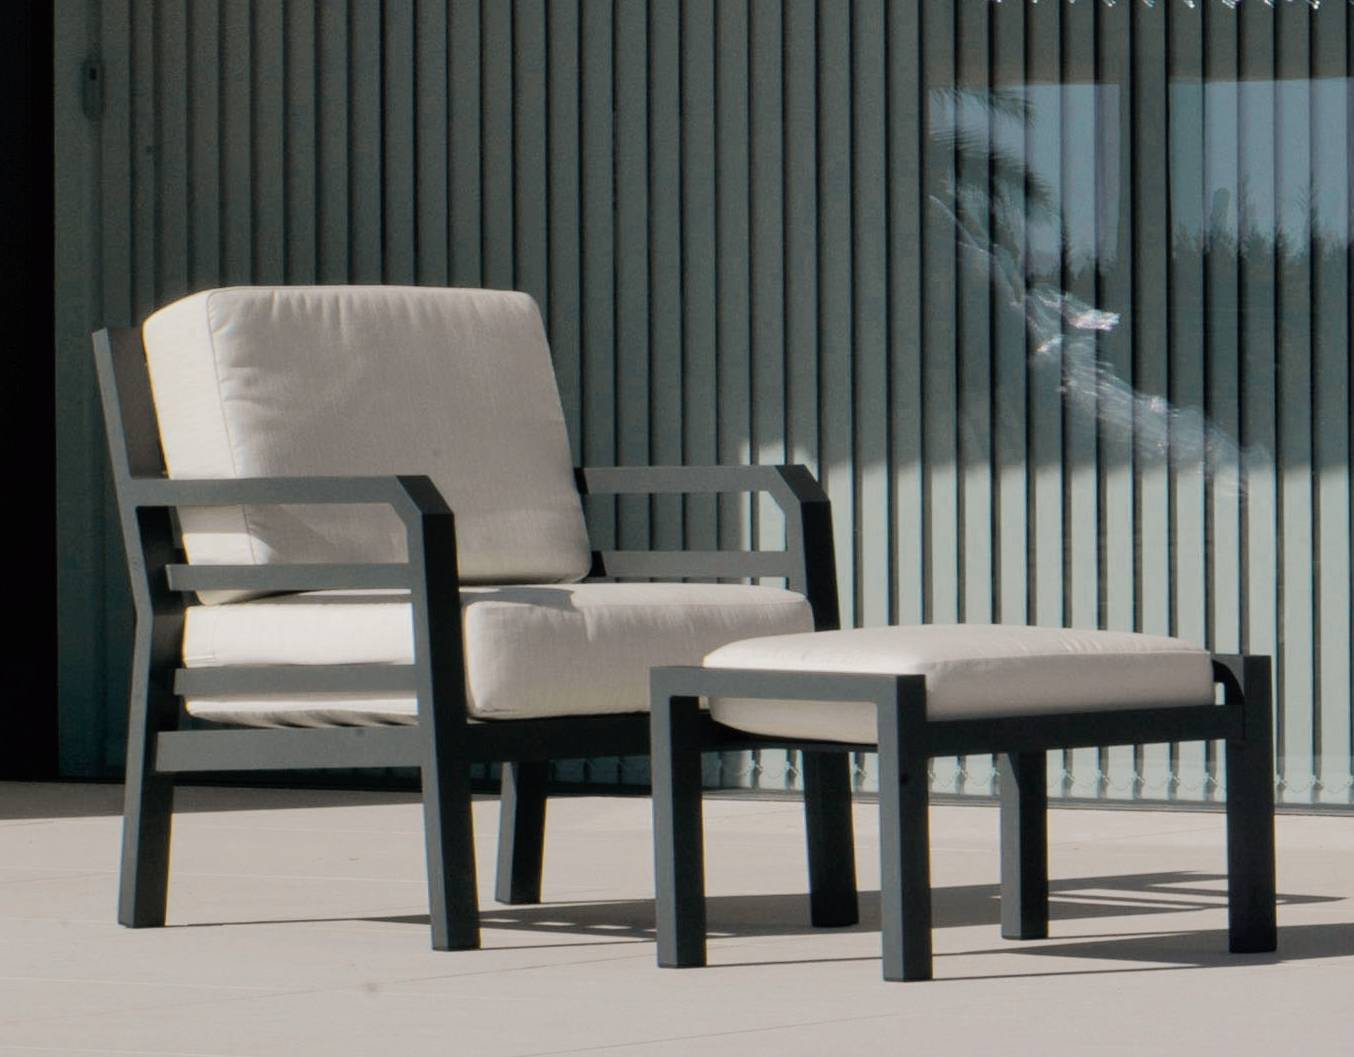 Set Aluminio Luxe Camelia-9 - Conjunto lujo de aluminio: 1 sofá de 2 plazas + 2 sillones + 2 reposapiés + 1 mesa de centro. Disponible en color blanco, antracita, champagne, plata o marrón.